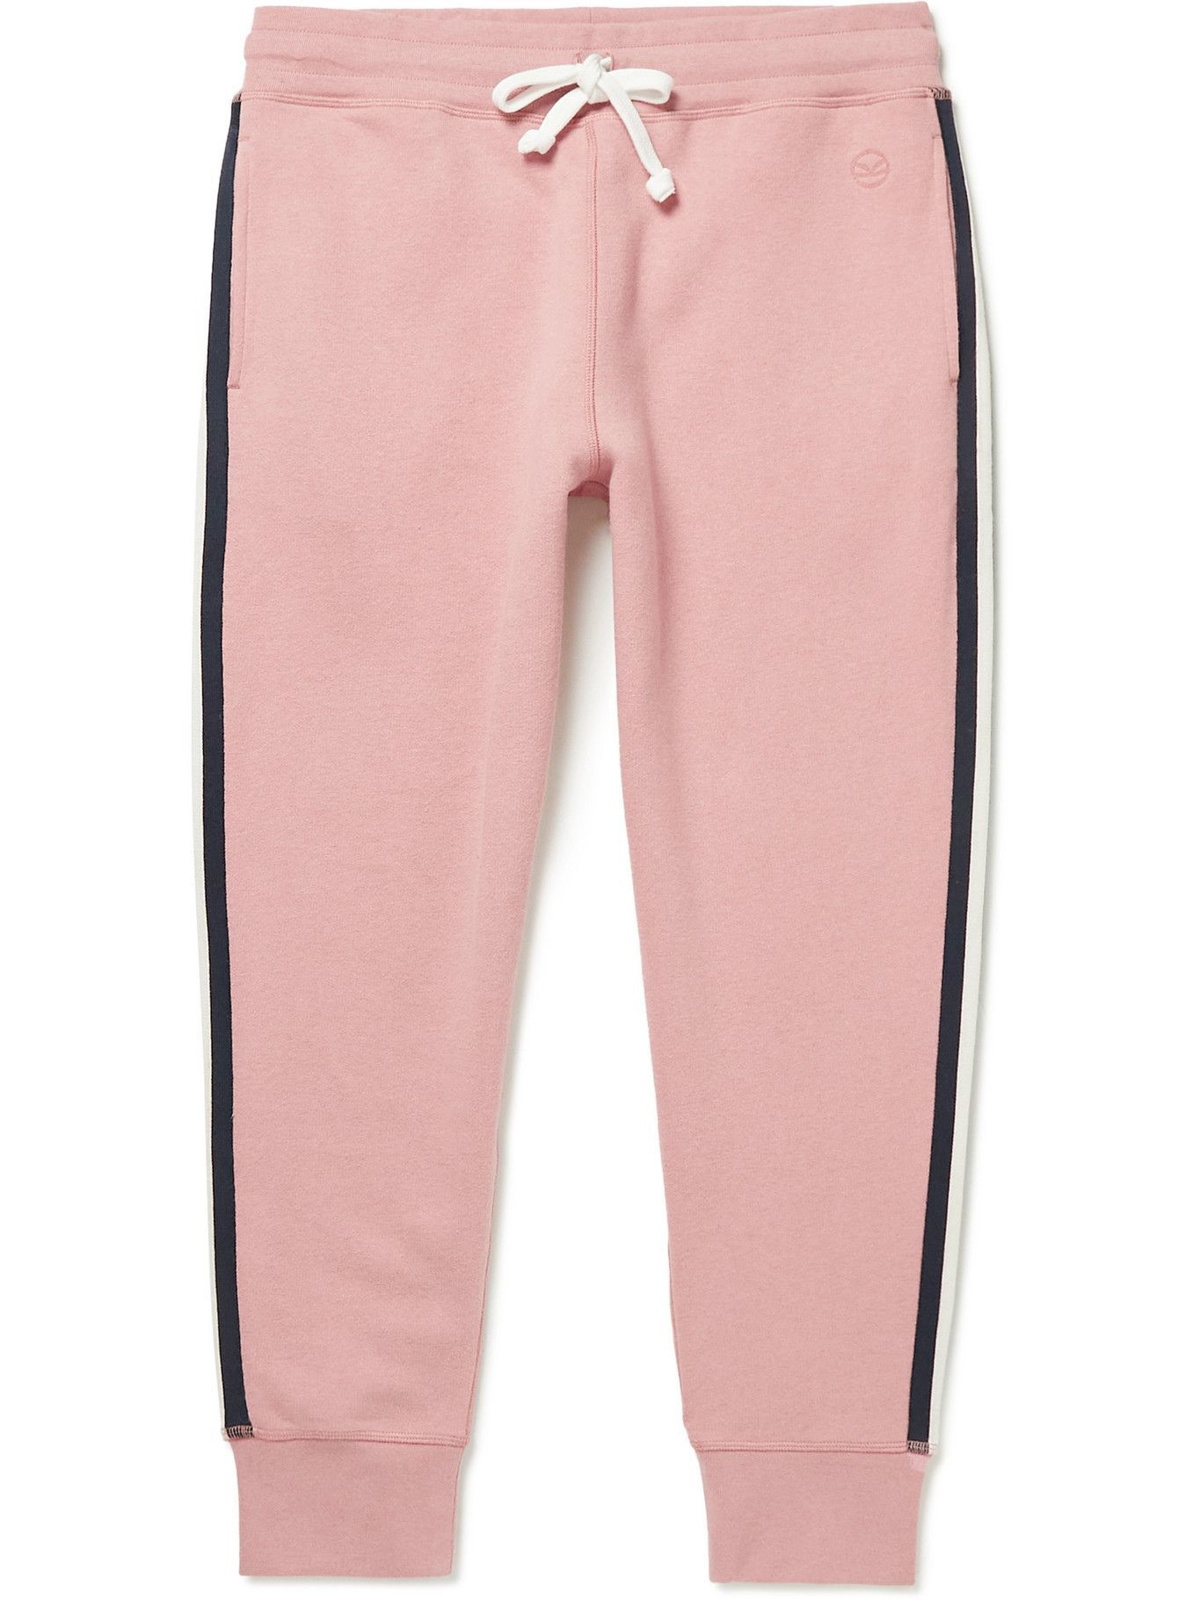 Cashmere Blend Jogging Pants in Soft Pink - Women